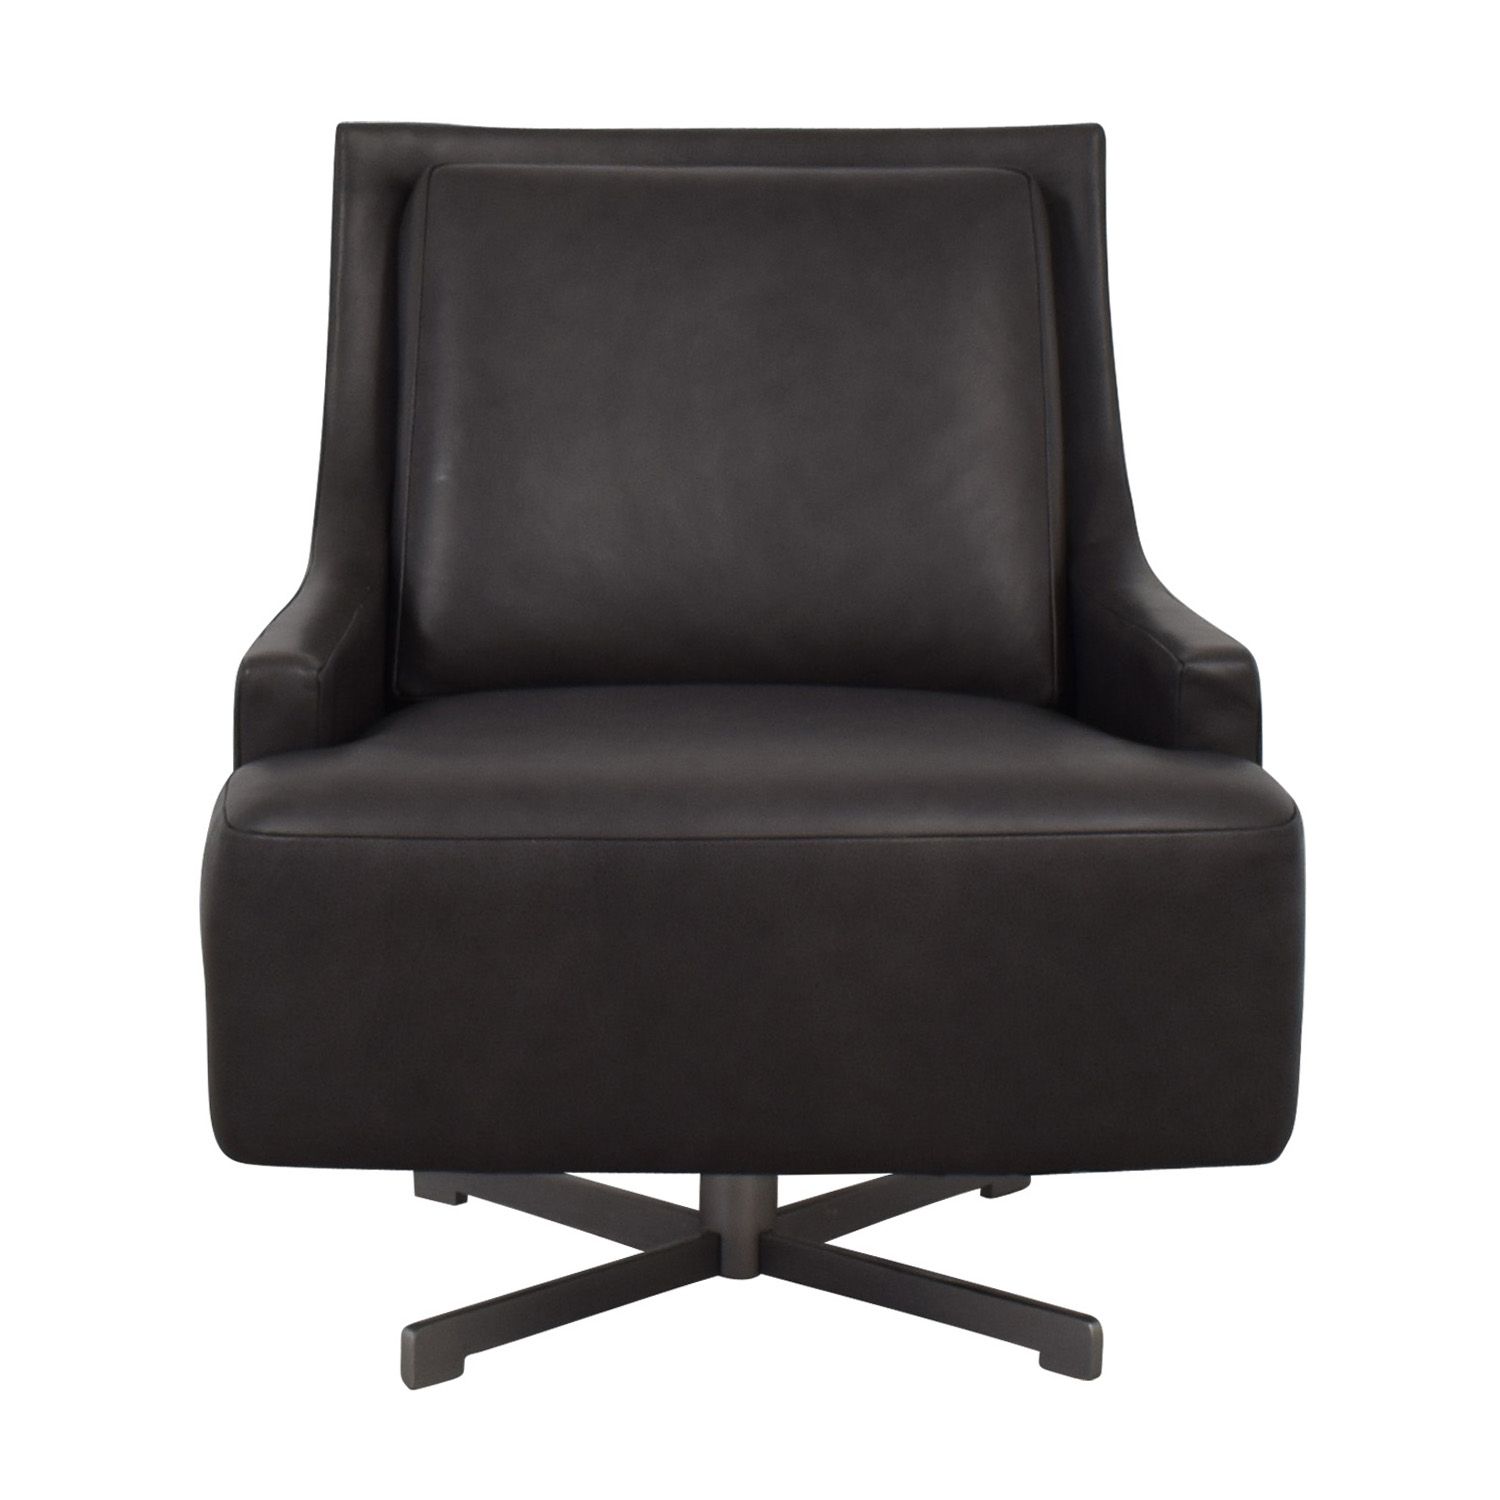 86% Off – Hbf Hbf Dark Grey Swivel Lounge Chair / Chairs Pertaining To Dark Grey Swivel Chairs (Photo 4 of 20)